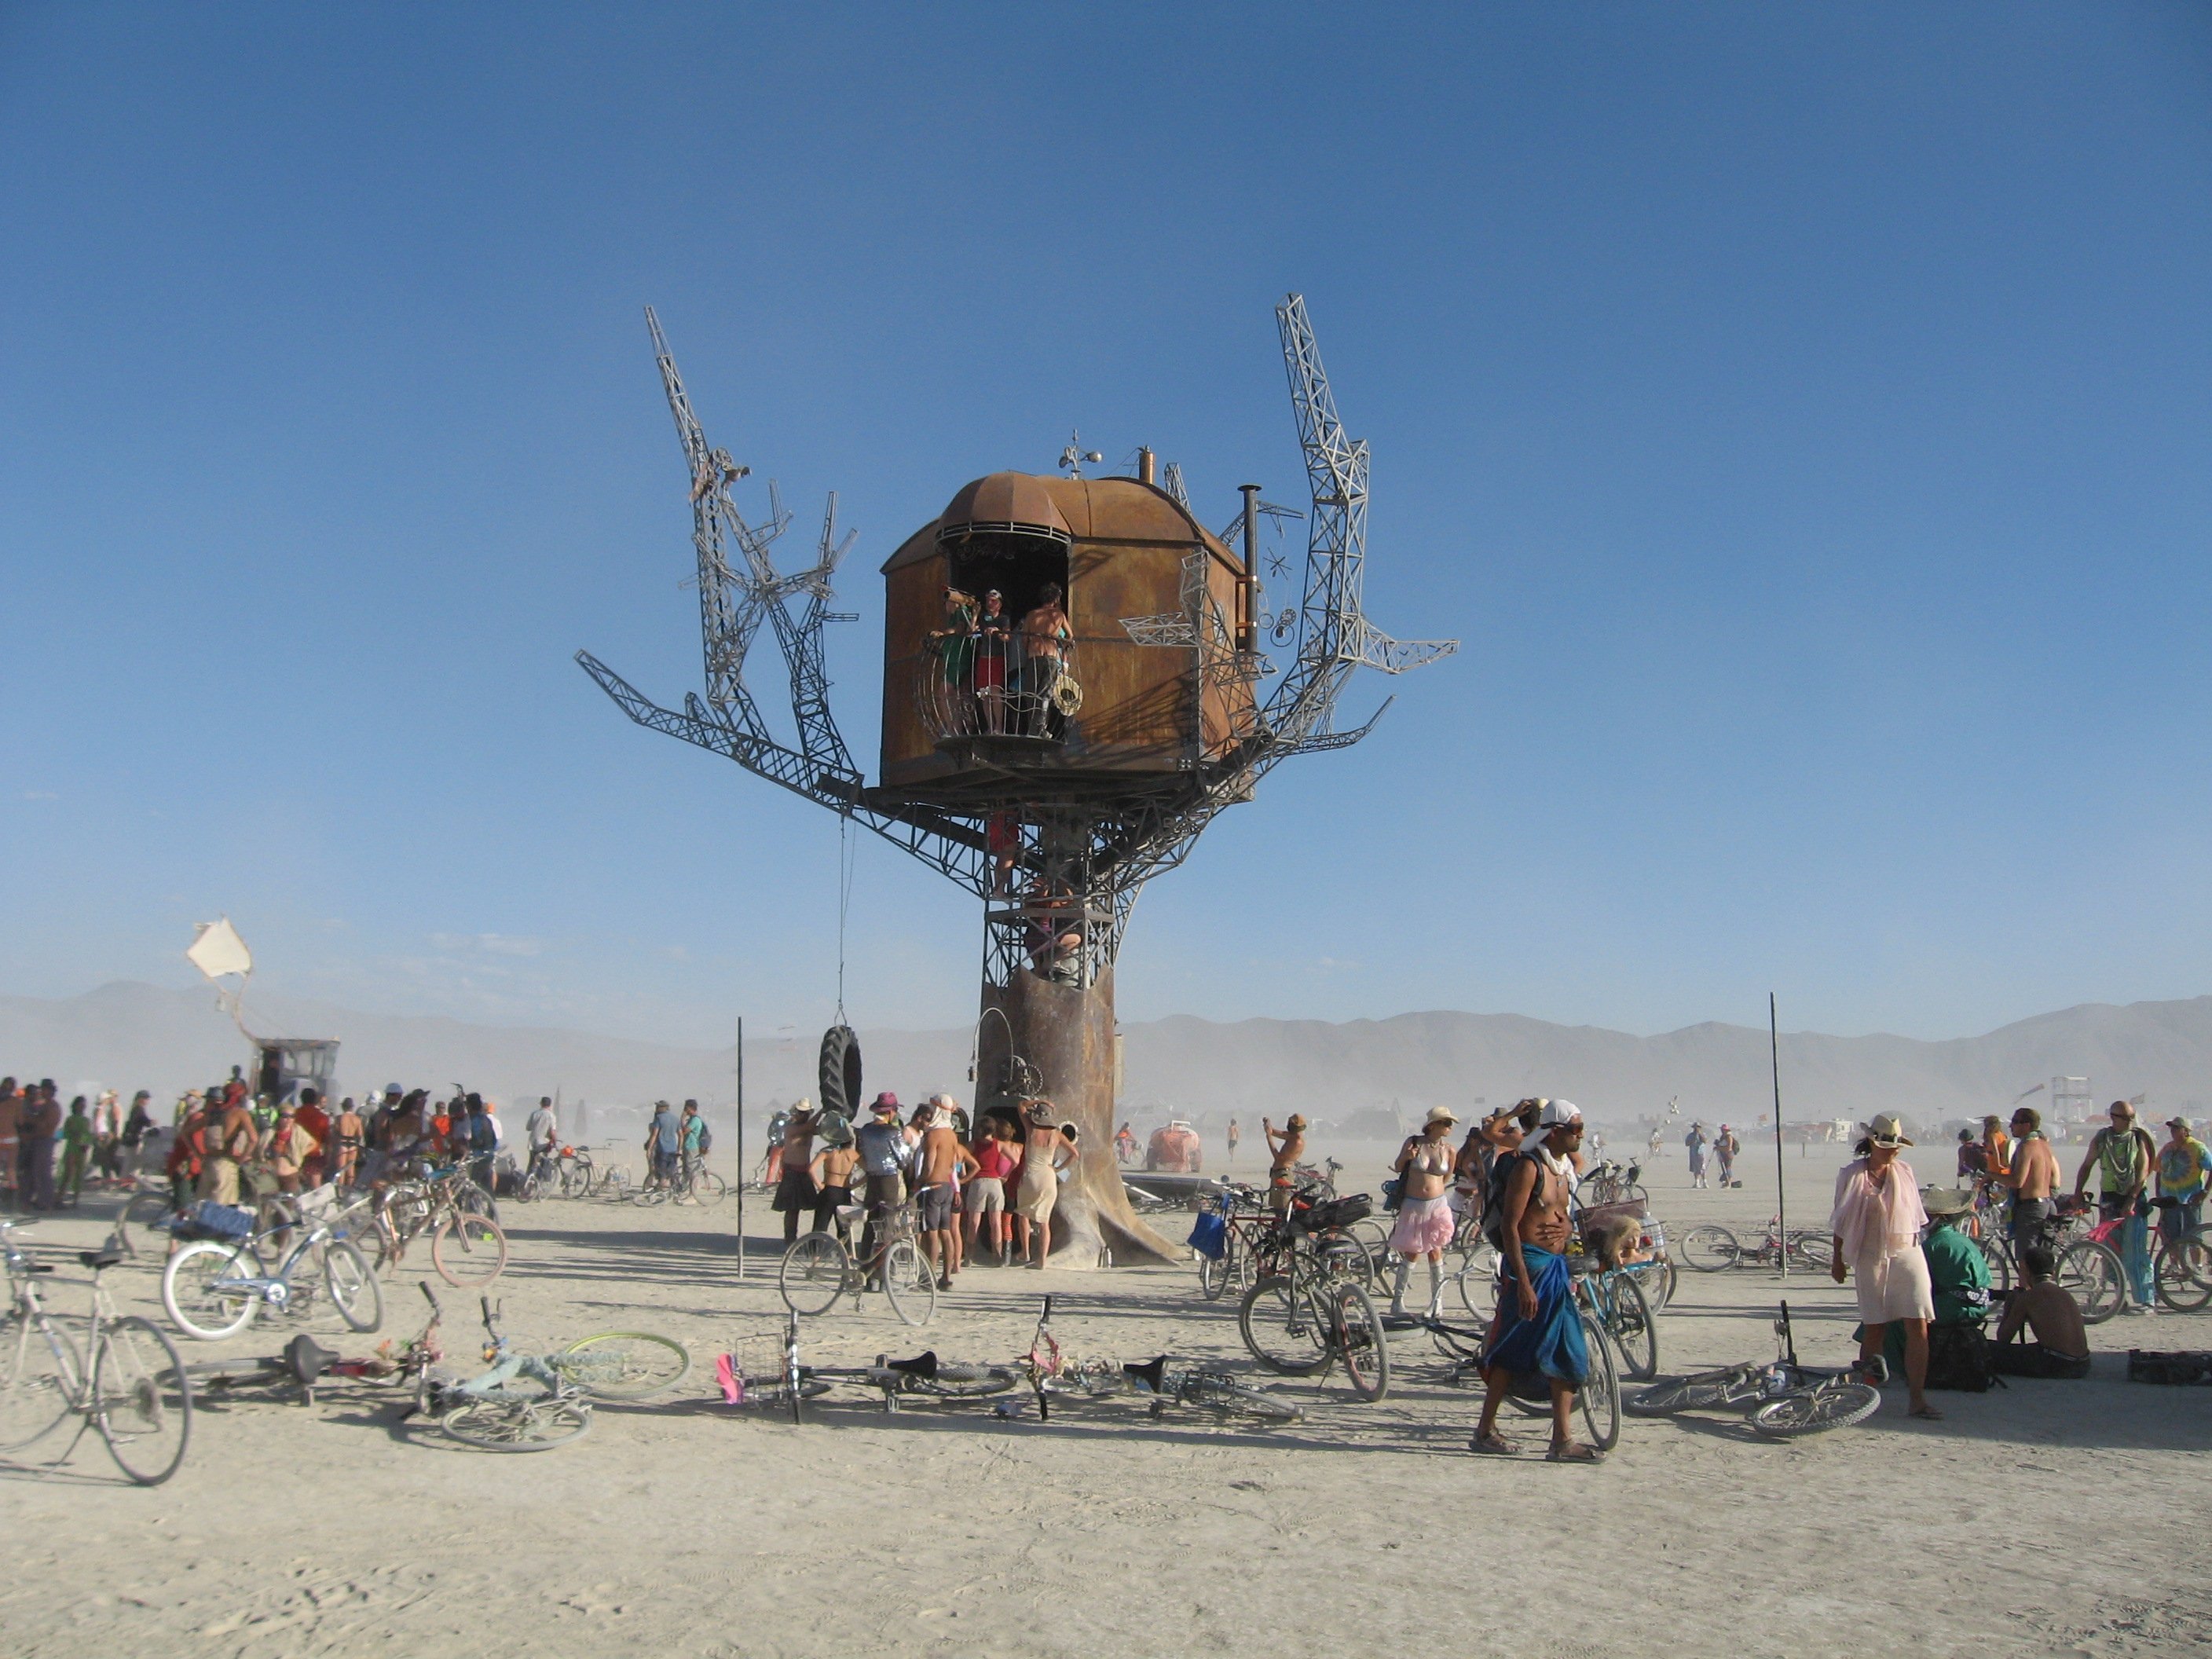 Burning Man Wallpaper